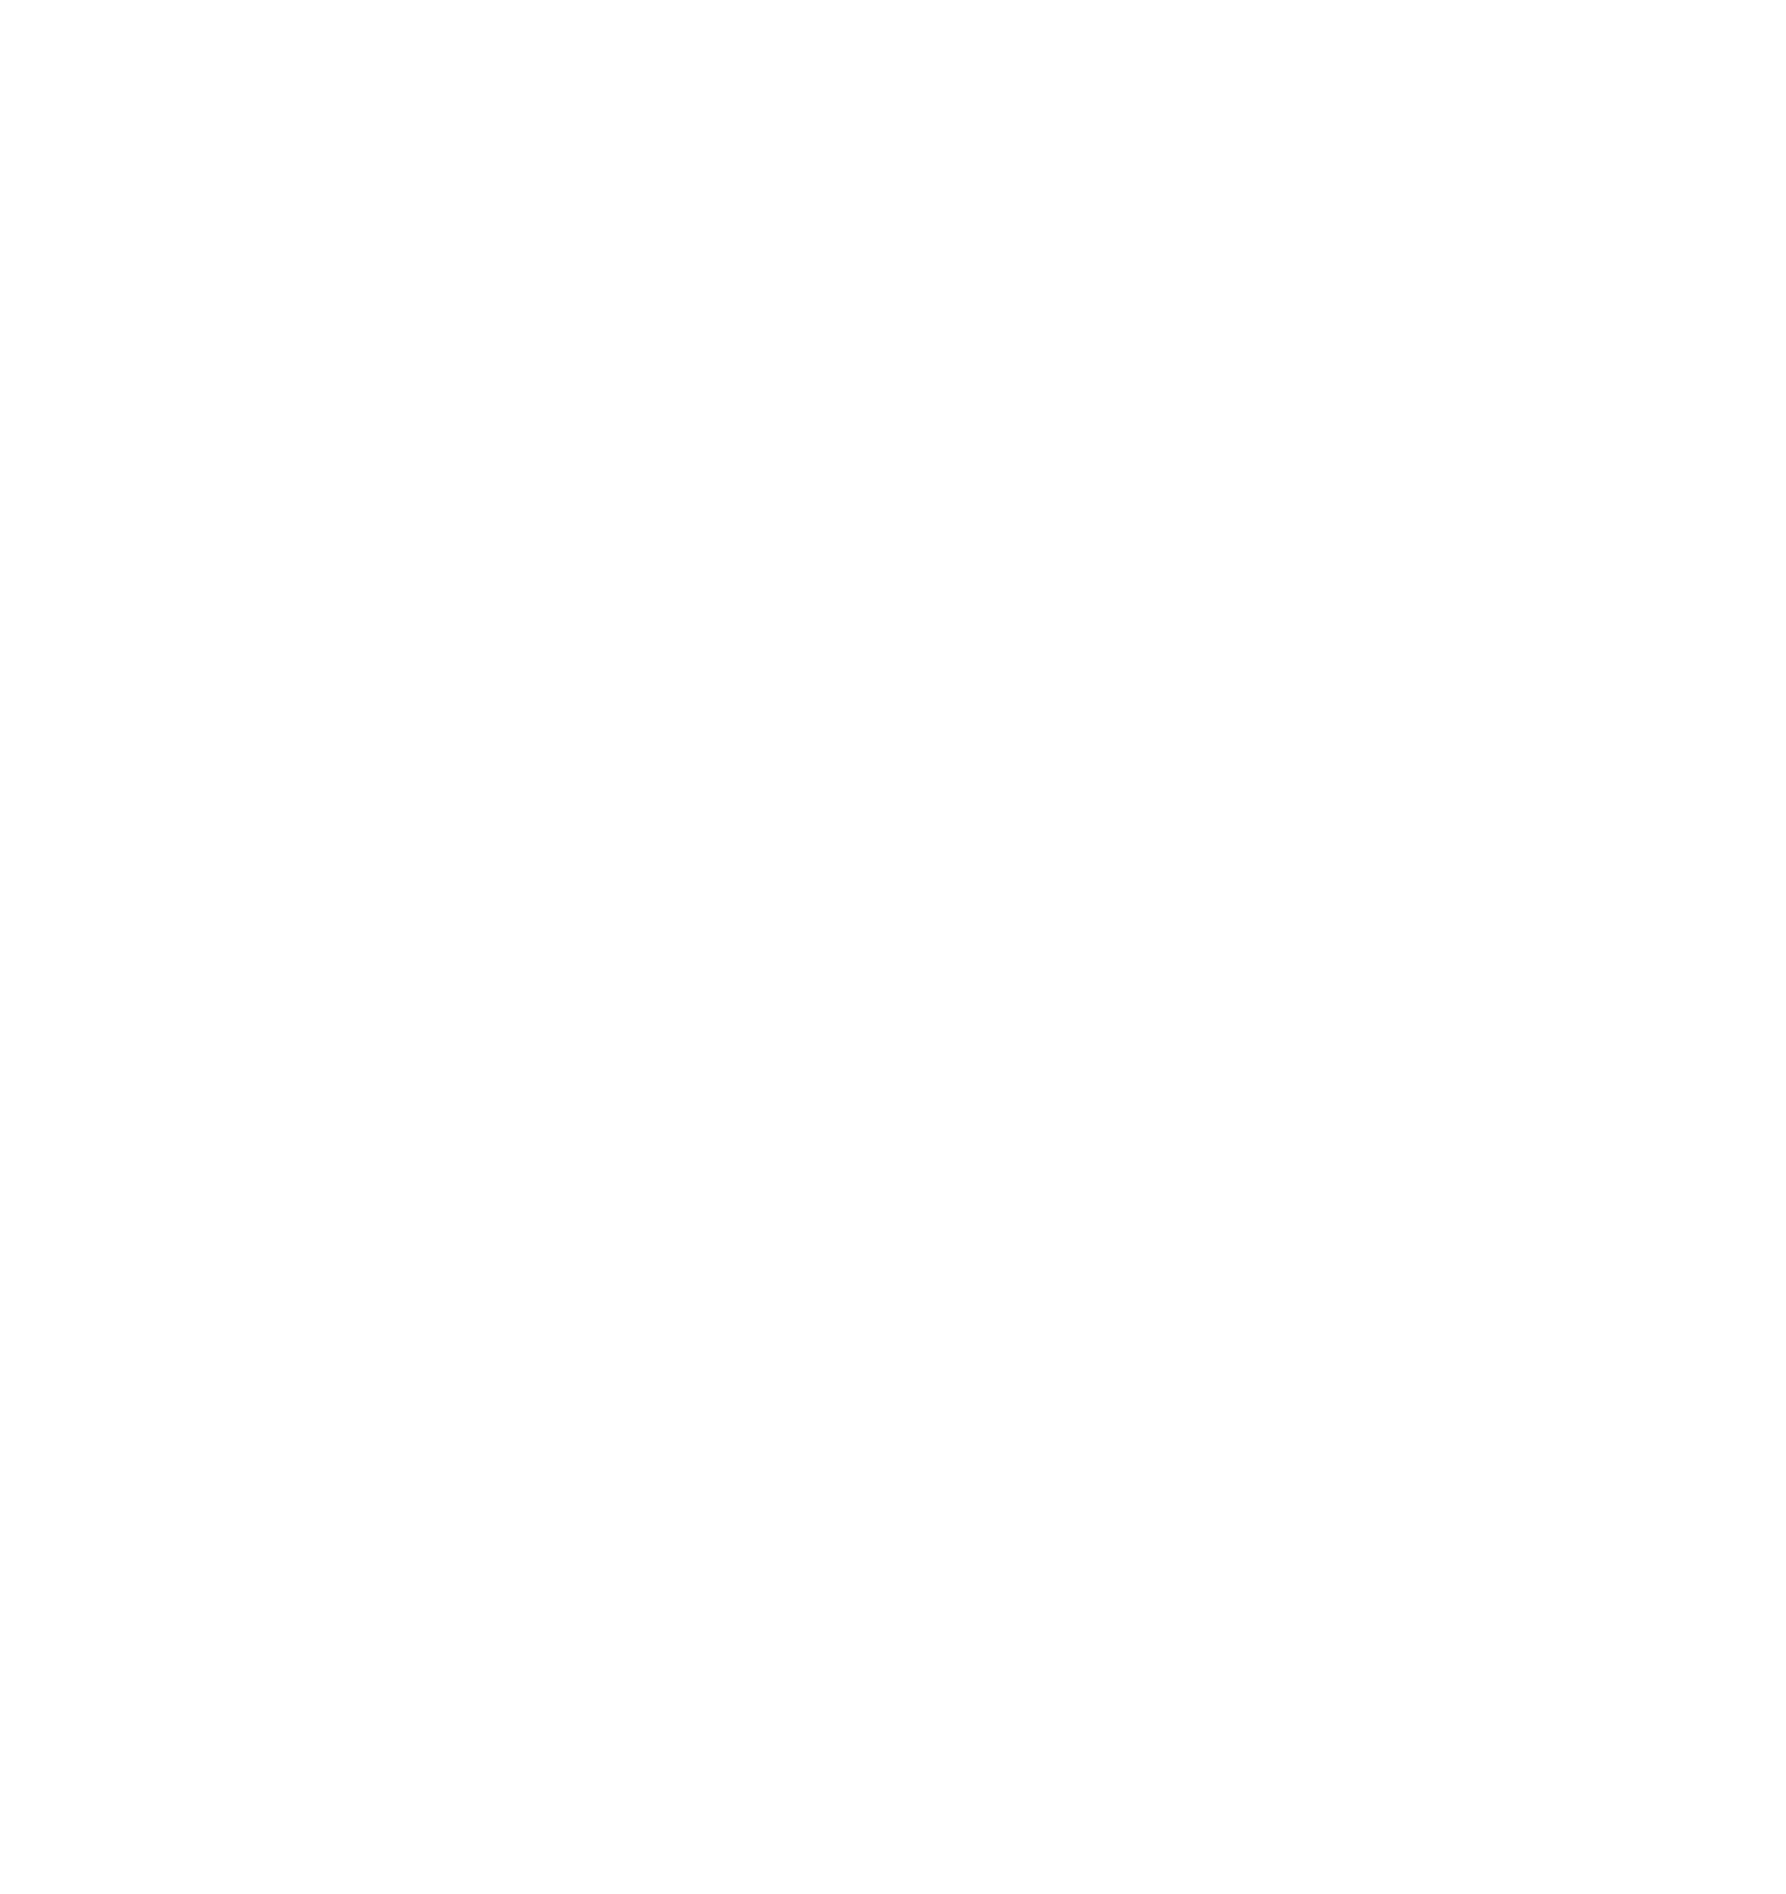 Logo text that says 'Scence & Word Jonah Jones'